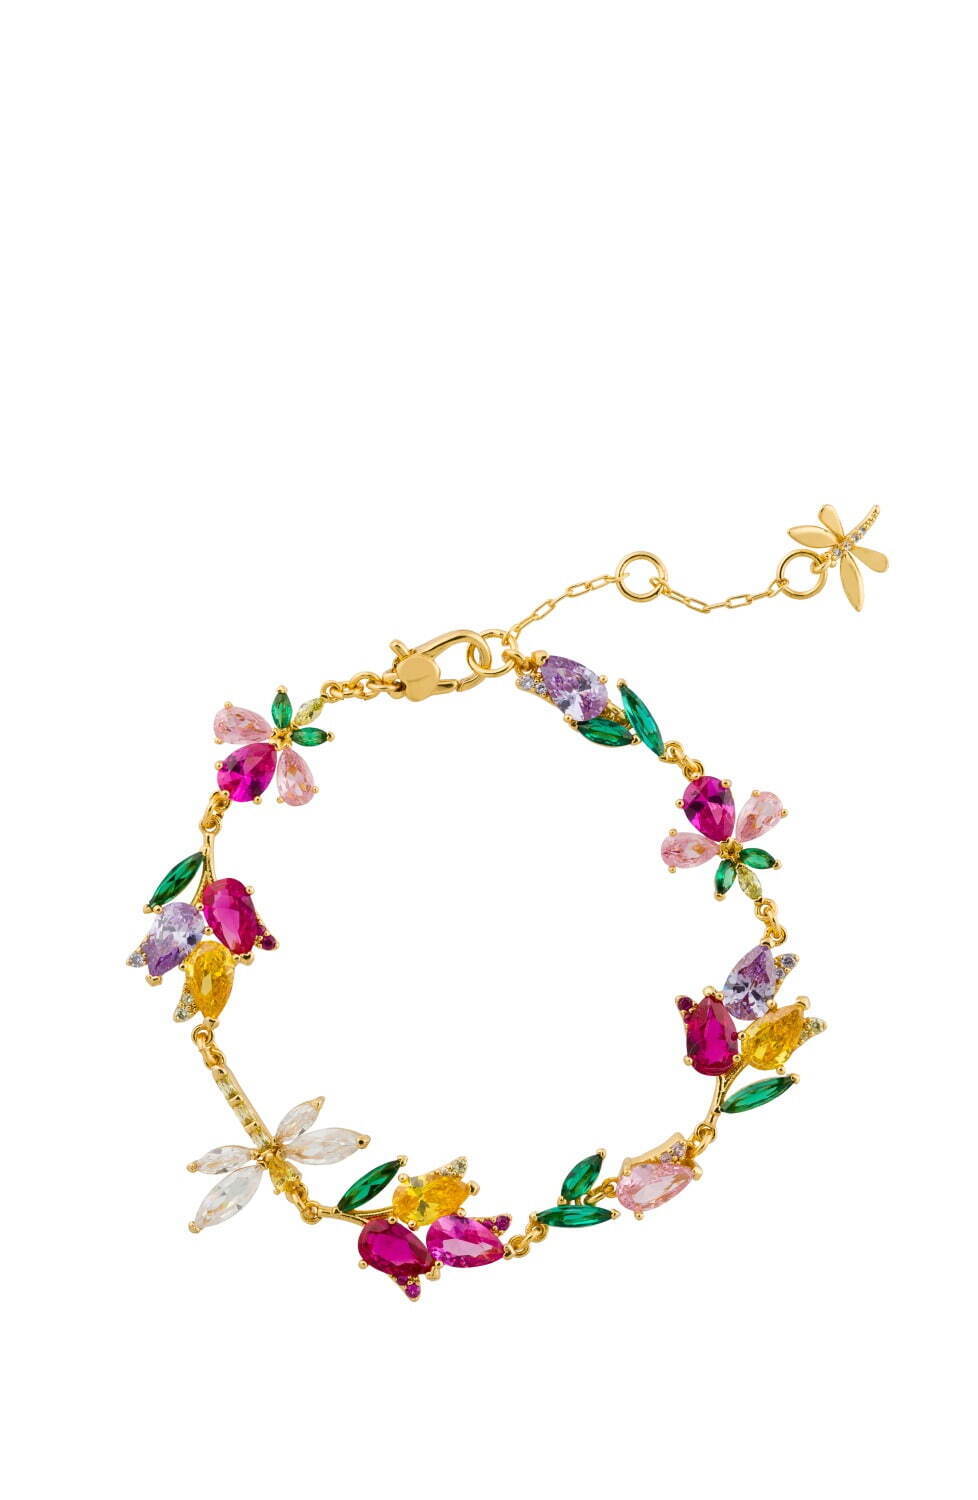 floral  bracelet
33,000円
※3月末発売予定